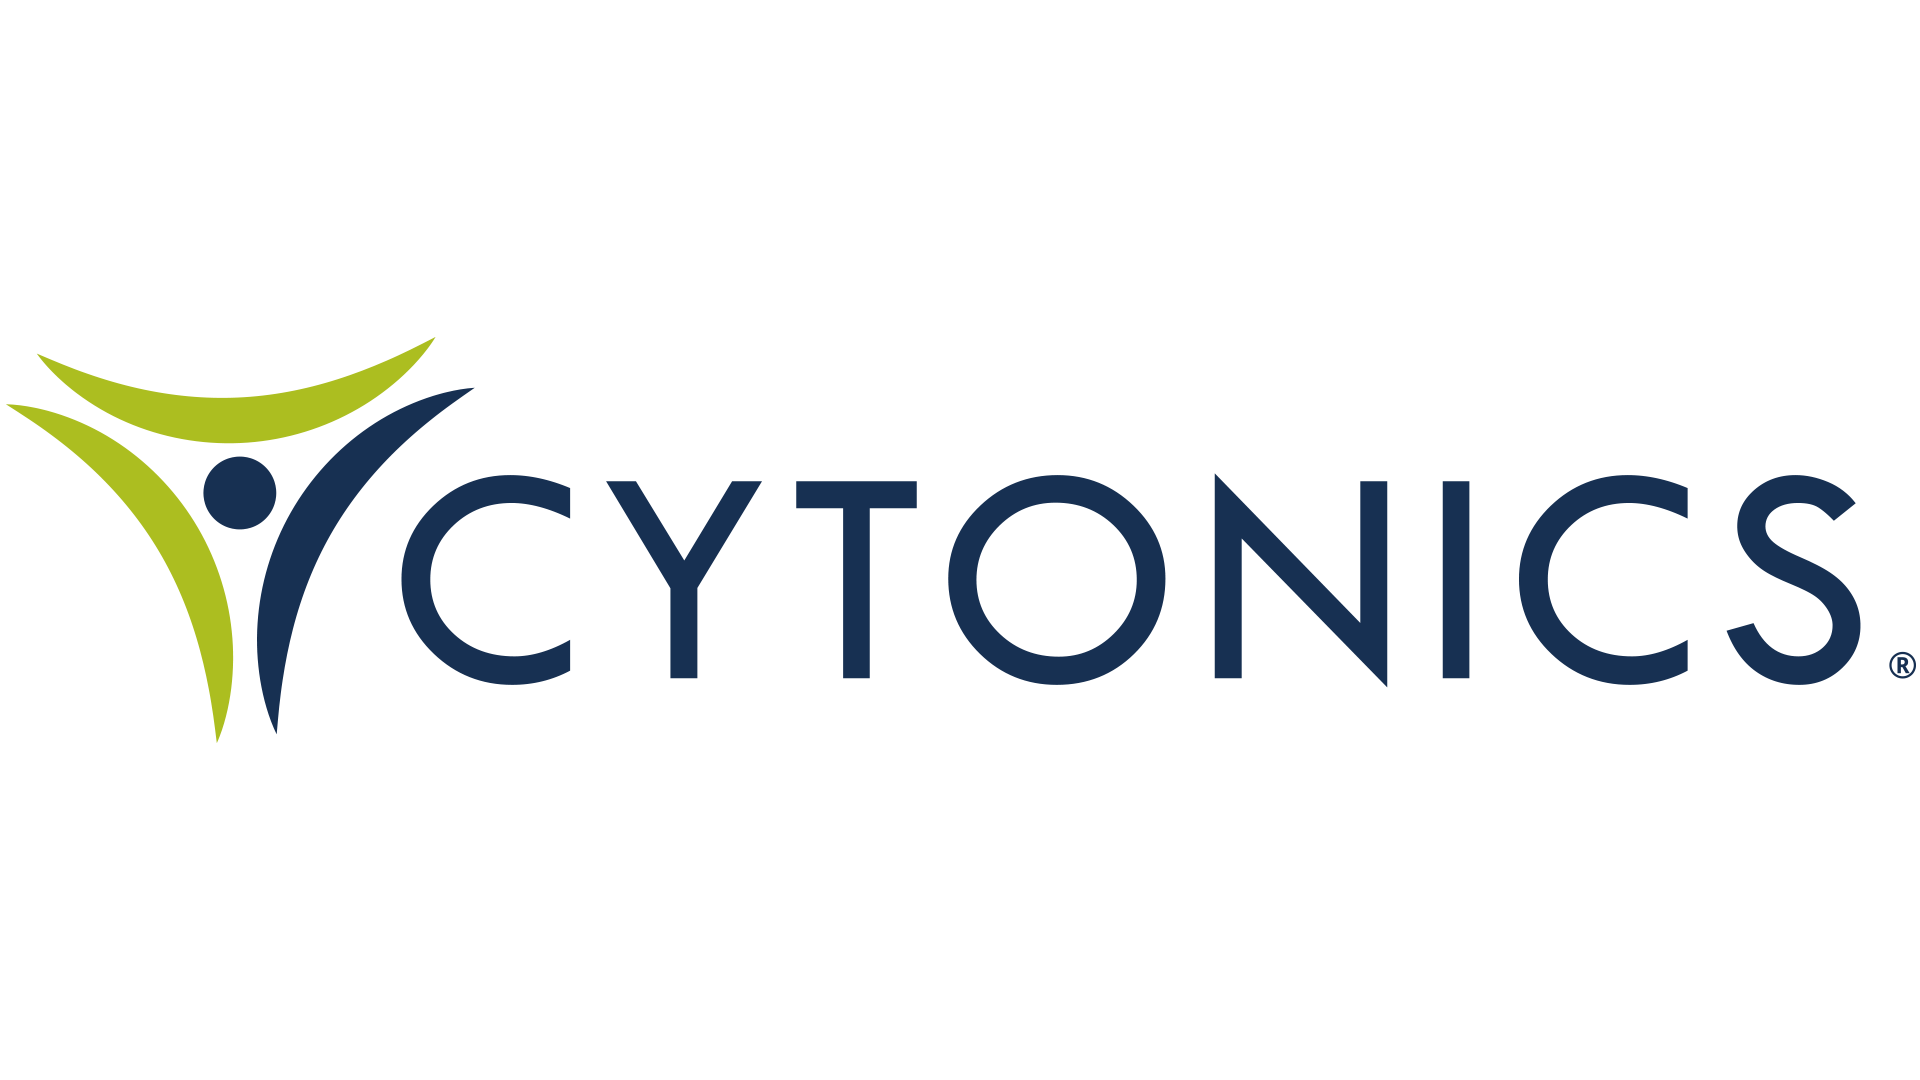 Cytonics Corporation